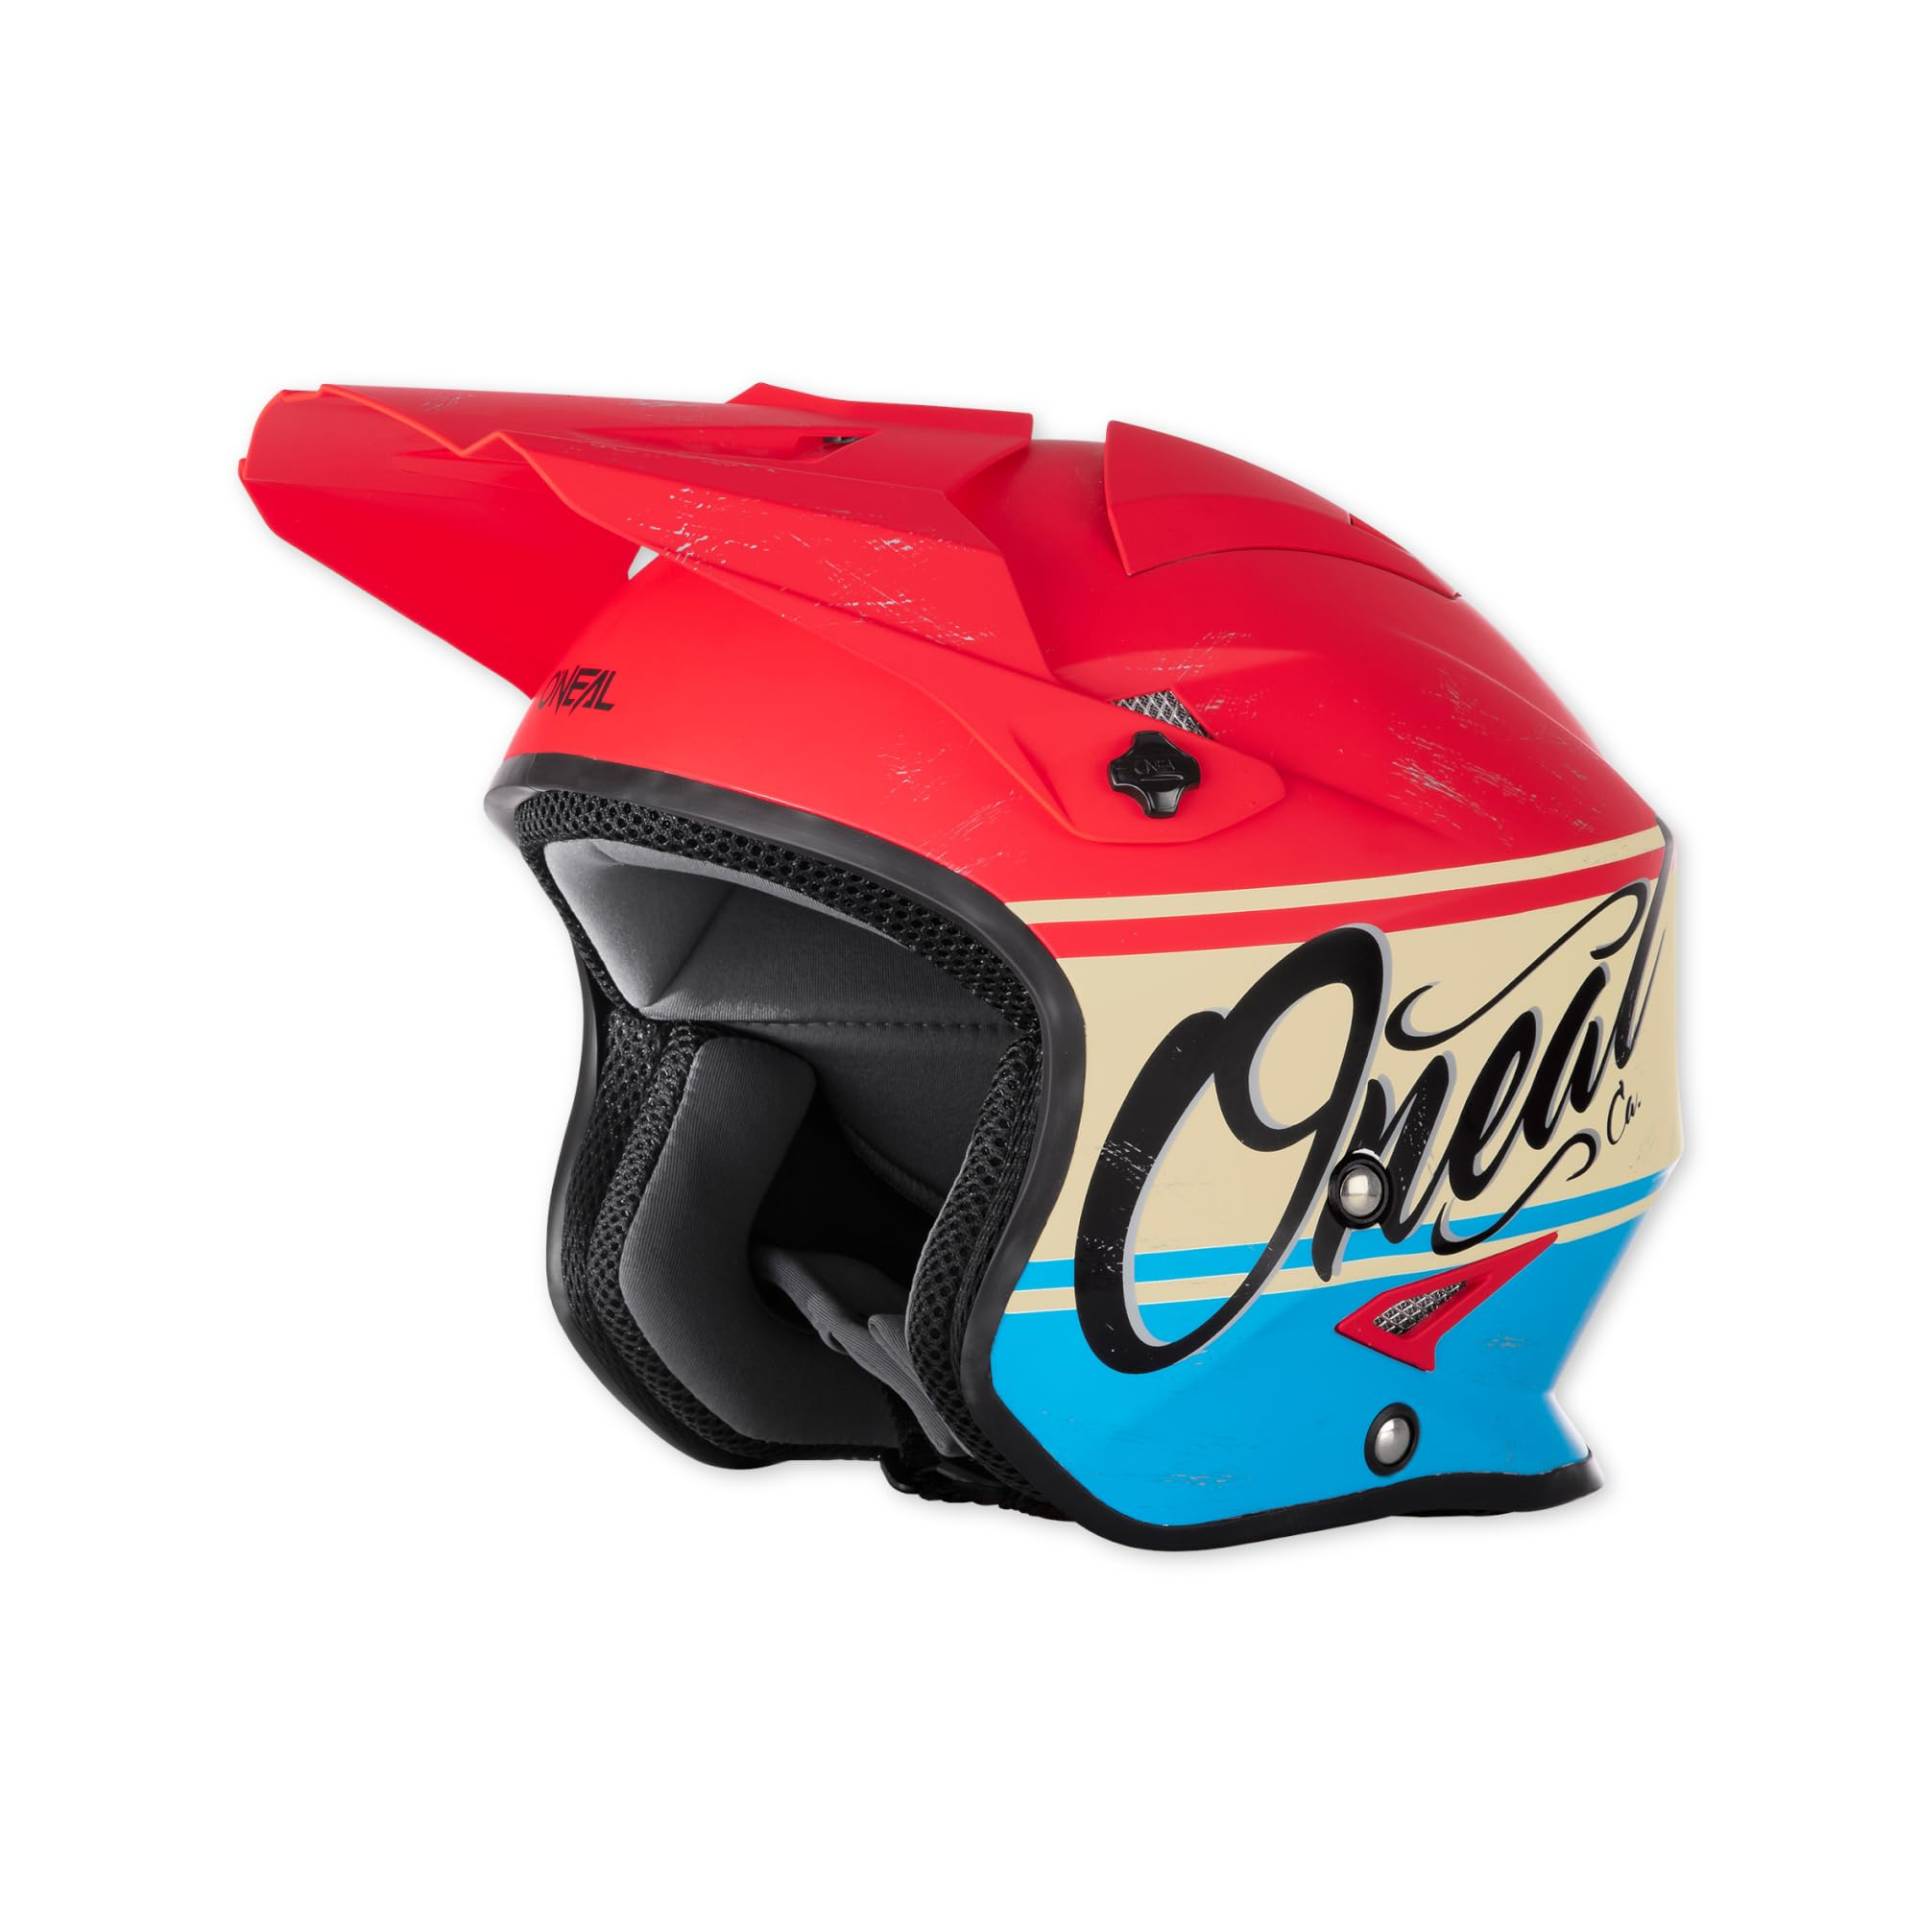 O'NEAL Slat Helmet Motorradhelm Herren Damen I Enduro Street Adventure I Fieberglas Jethelm mit waschbarem Innenfutter I I Rot Blau I Größe XL von O'NEAL